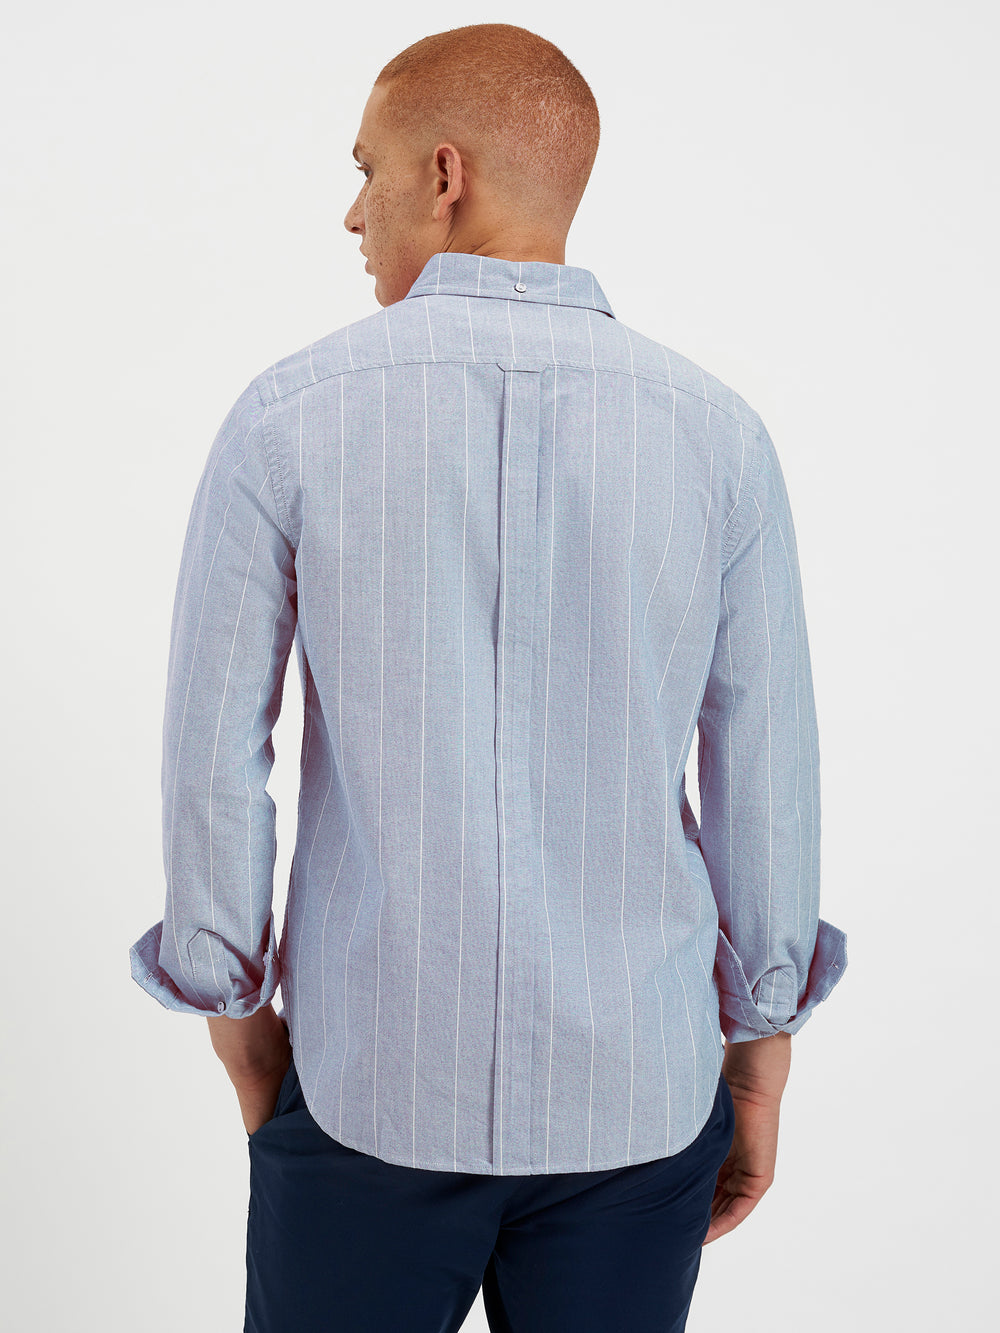 Brighton Oxford Organic Stripe Shirt - Ocean Blue Chalk Stripe